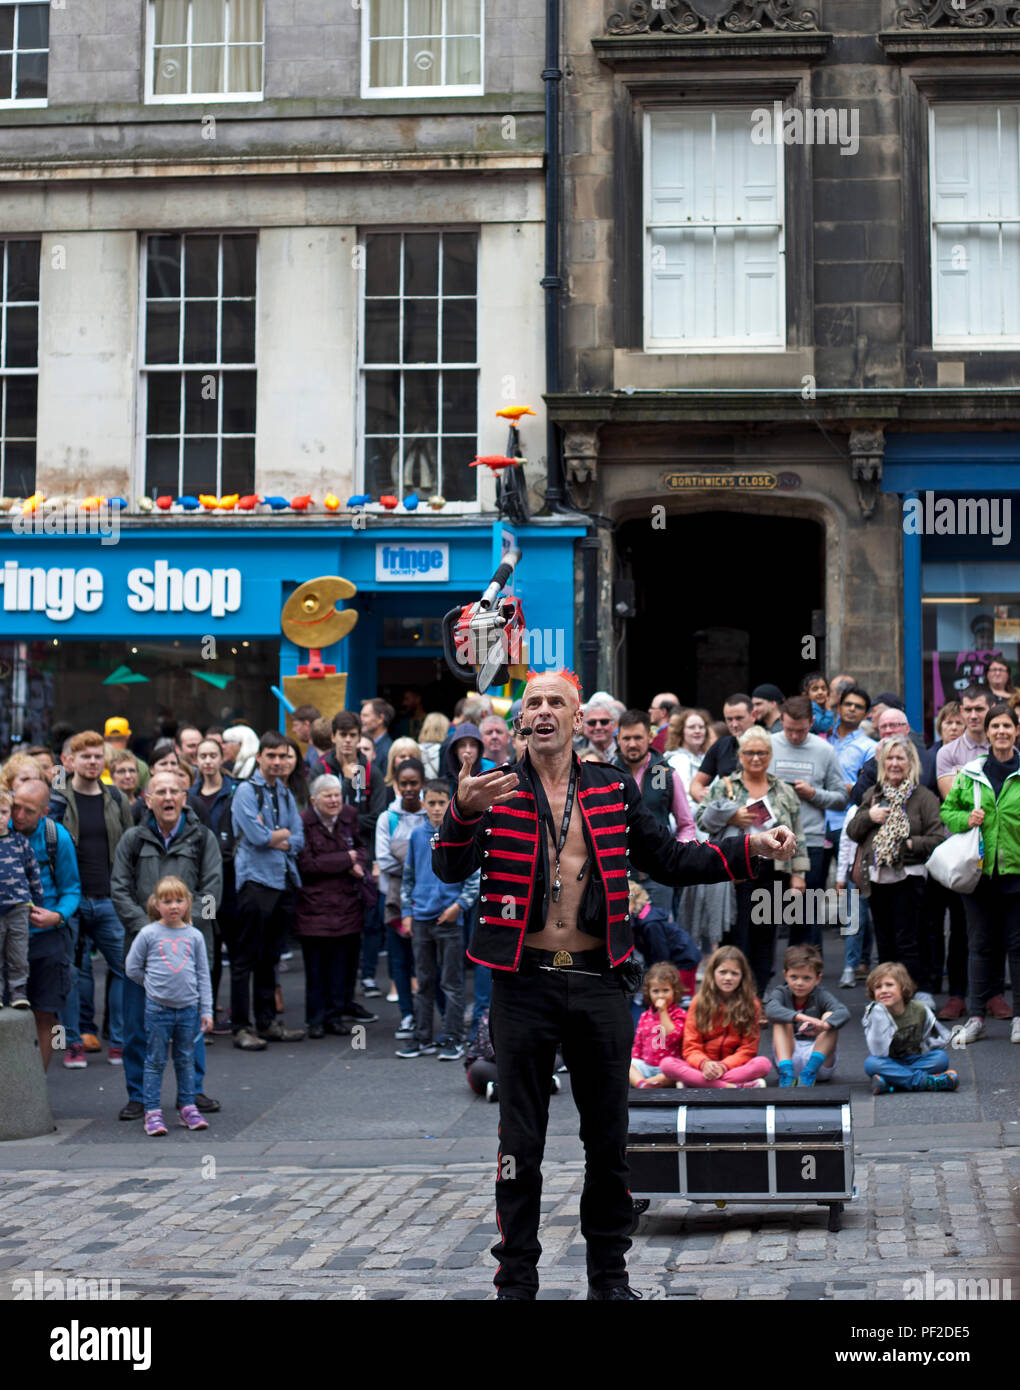 The Mighty Gareth, street performer, Edinburgh Fringe Festival, Royal MIle, Edinburgh Scotland, UK Stock Photo